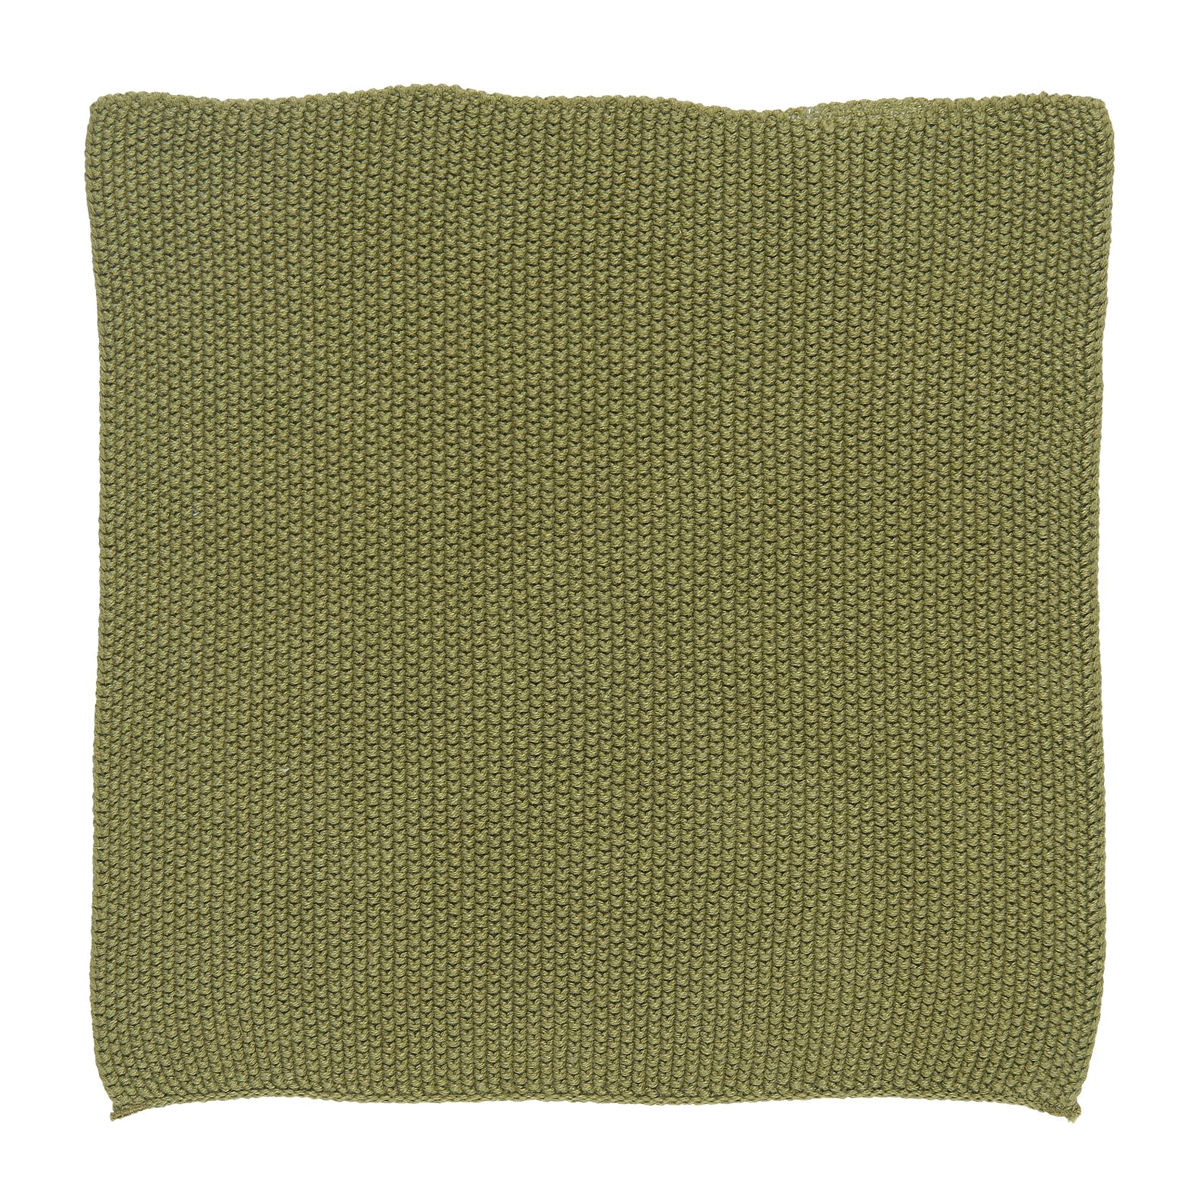 IB Laursen Mynte Cloth herbal green knitted